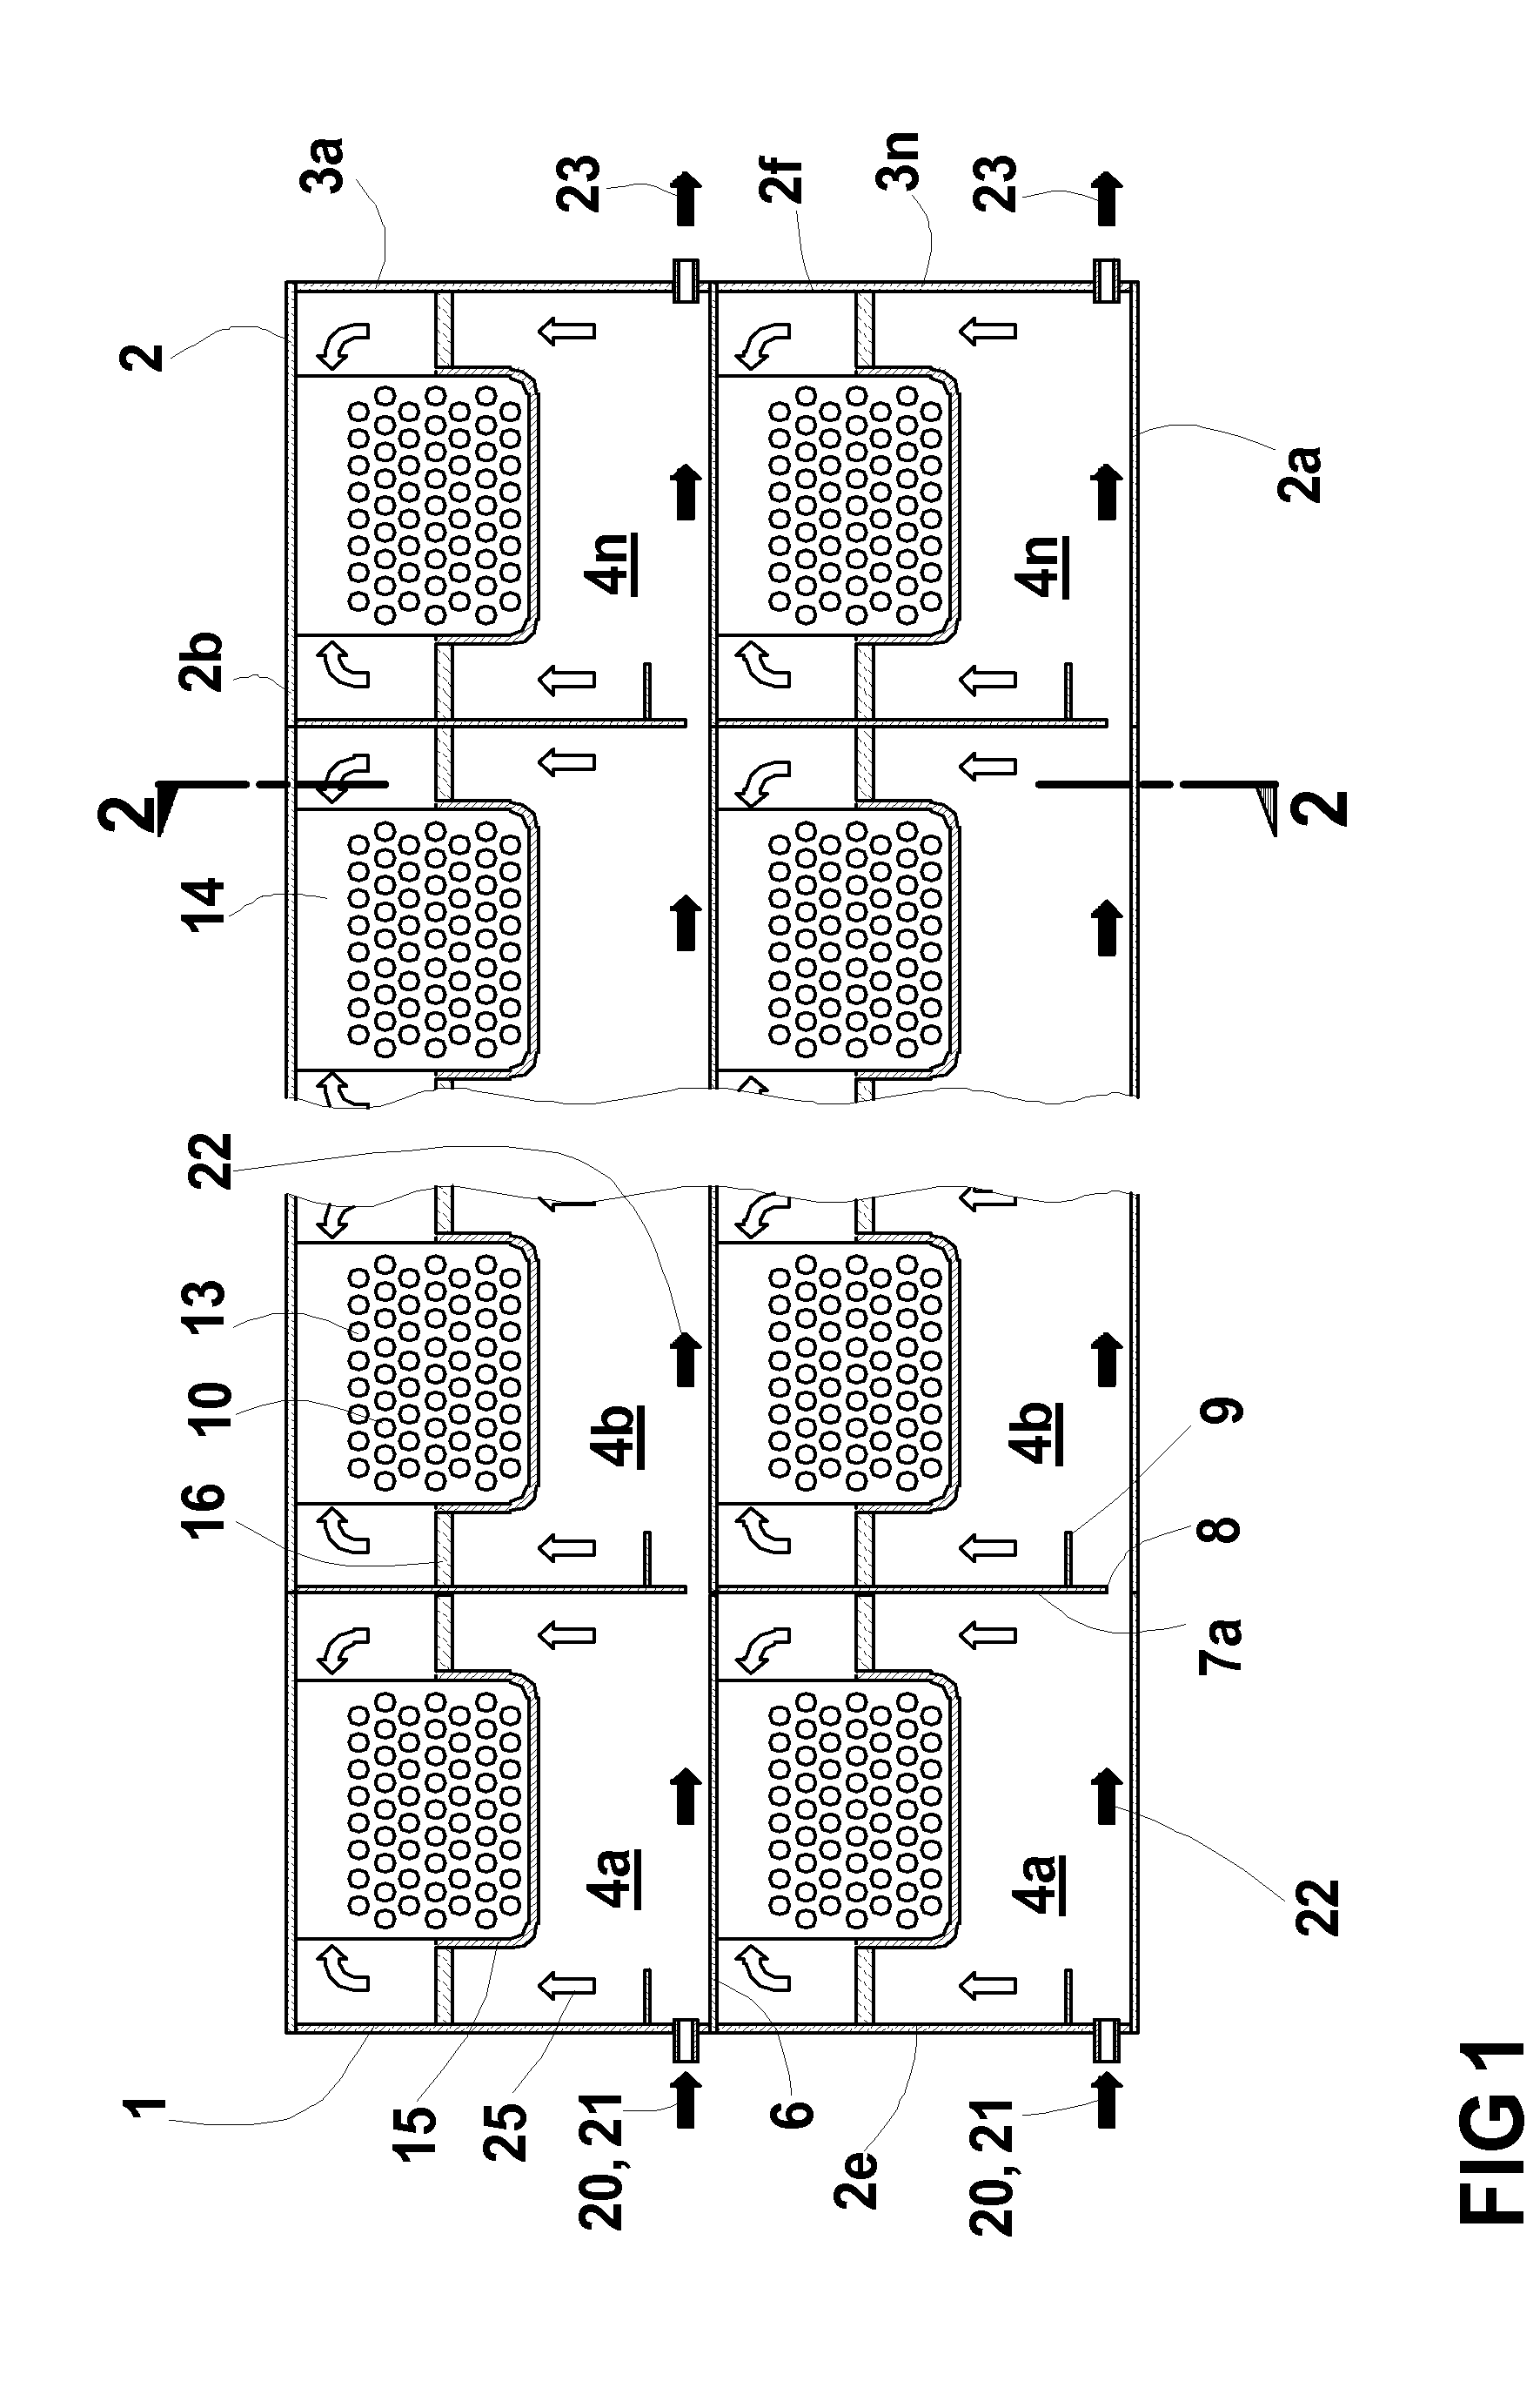 Multi-stage flash evaporator